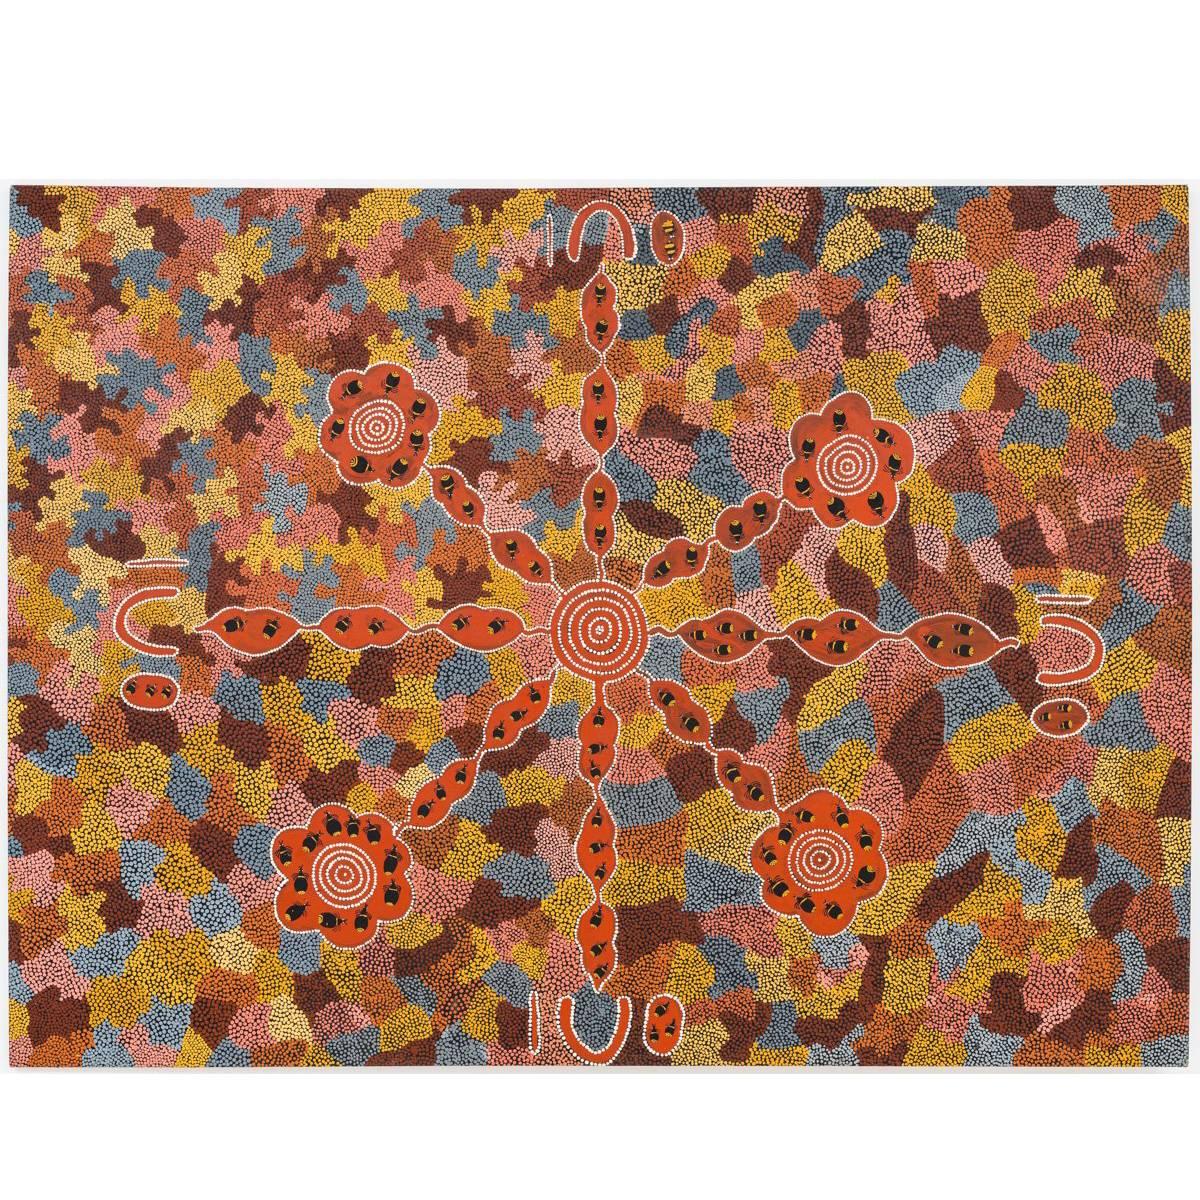 'Honey Ant Dreaming', Australian Aboriginal Painting by Tiger Japanangka For Sale